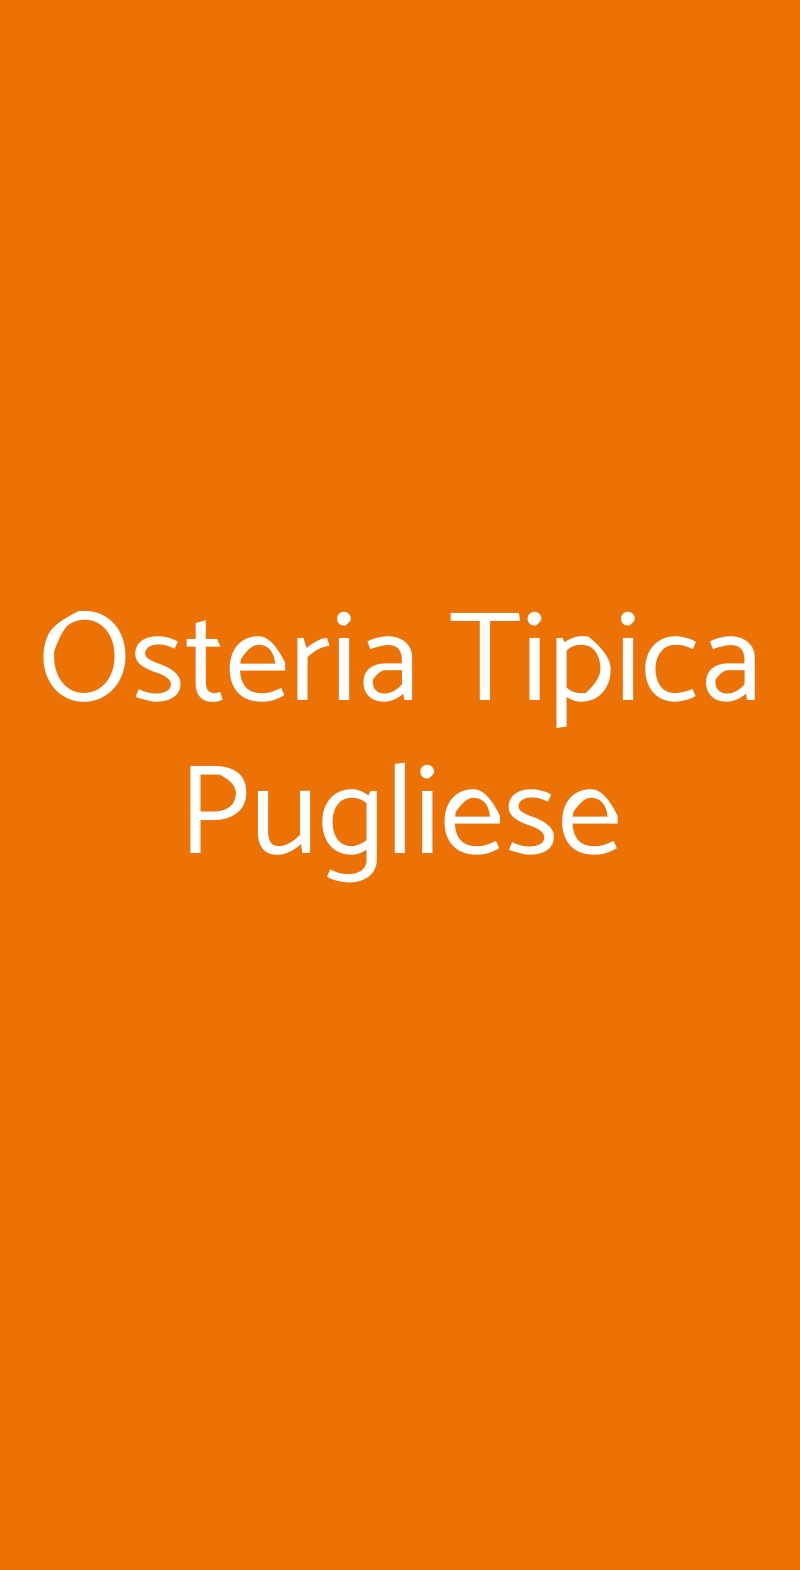 Osteria Tipica Pugliese Milano menù 1 pagina